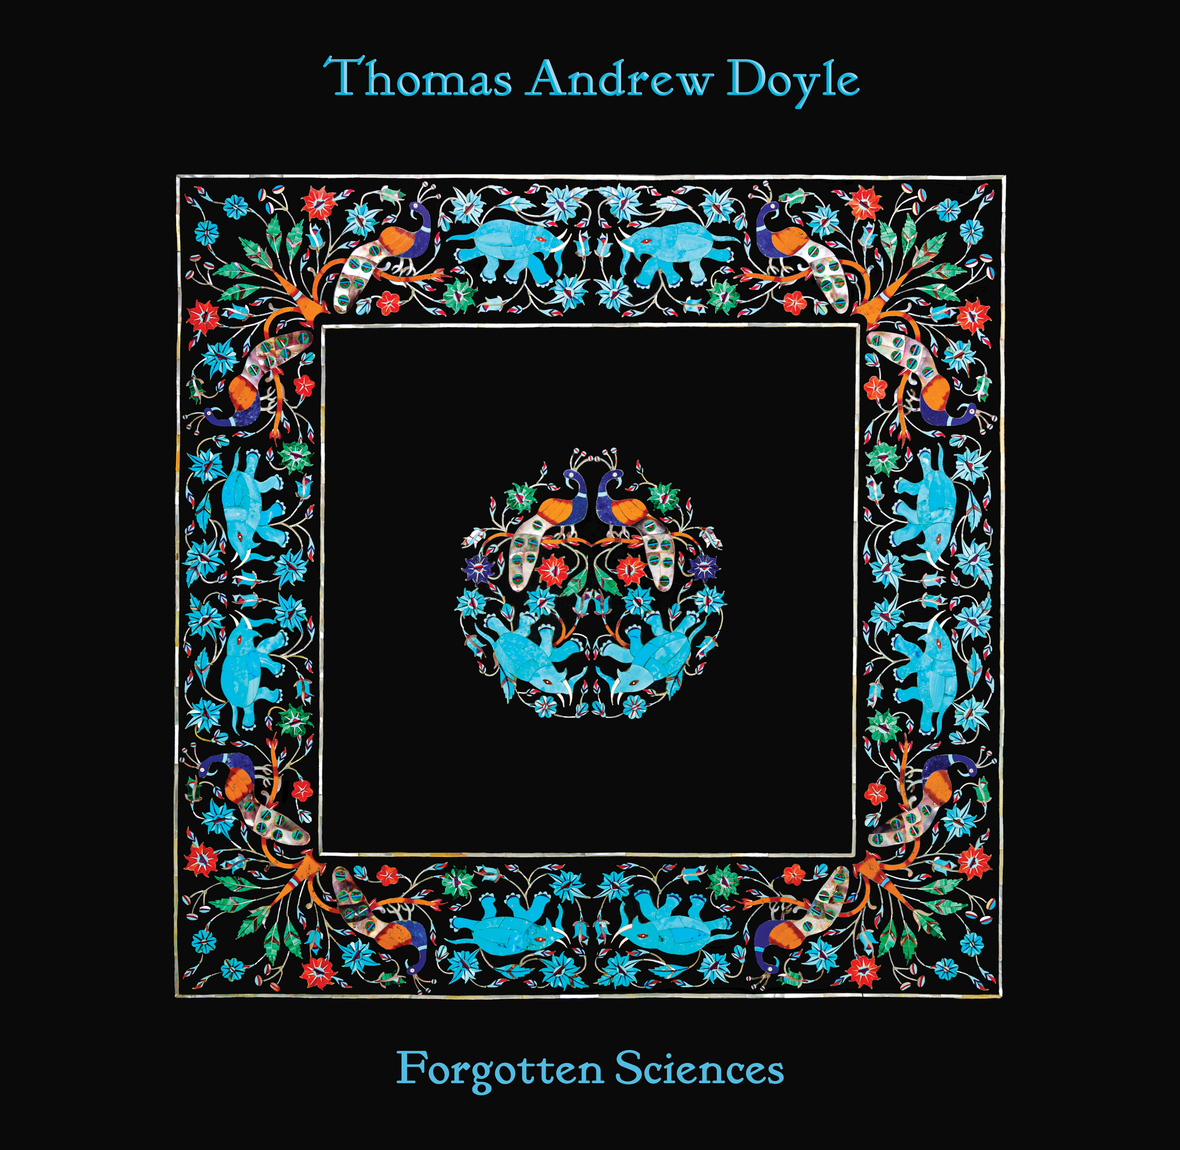 Thomas Andrew Doyle ‘Forgotten Sciences’ album artwork